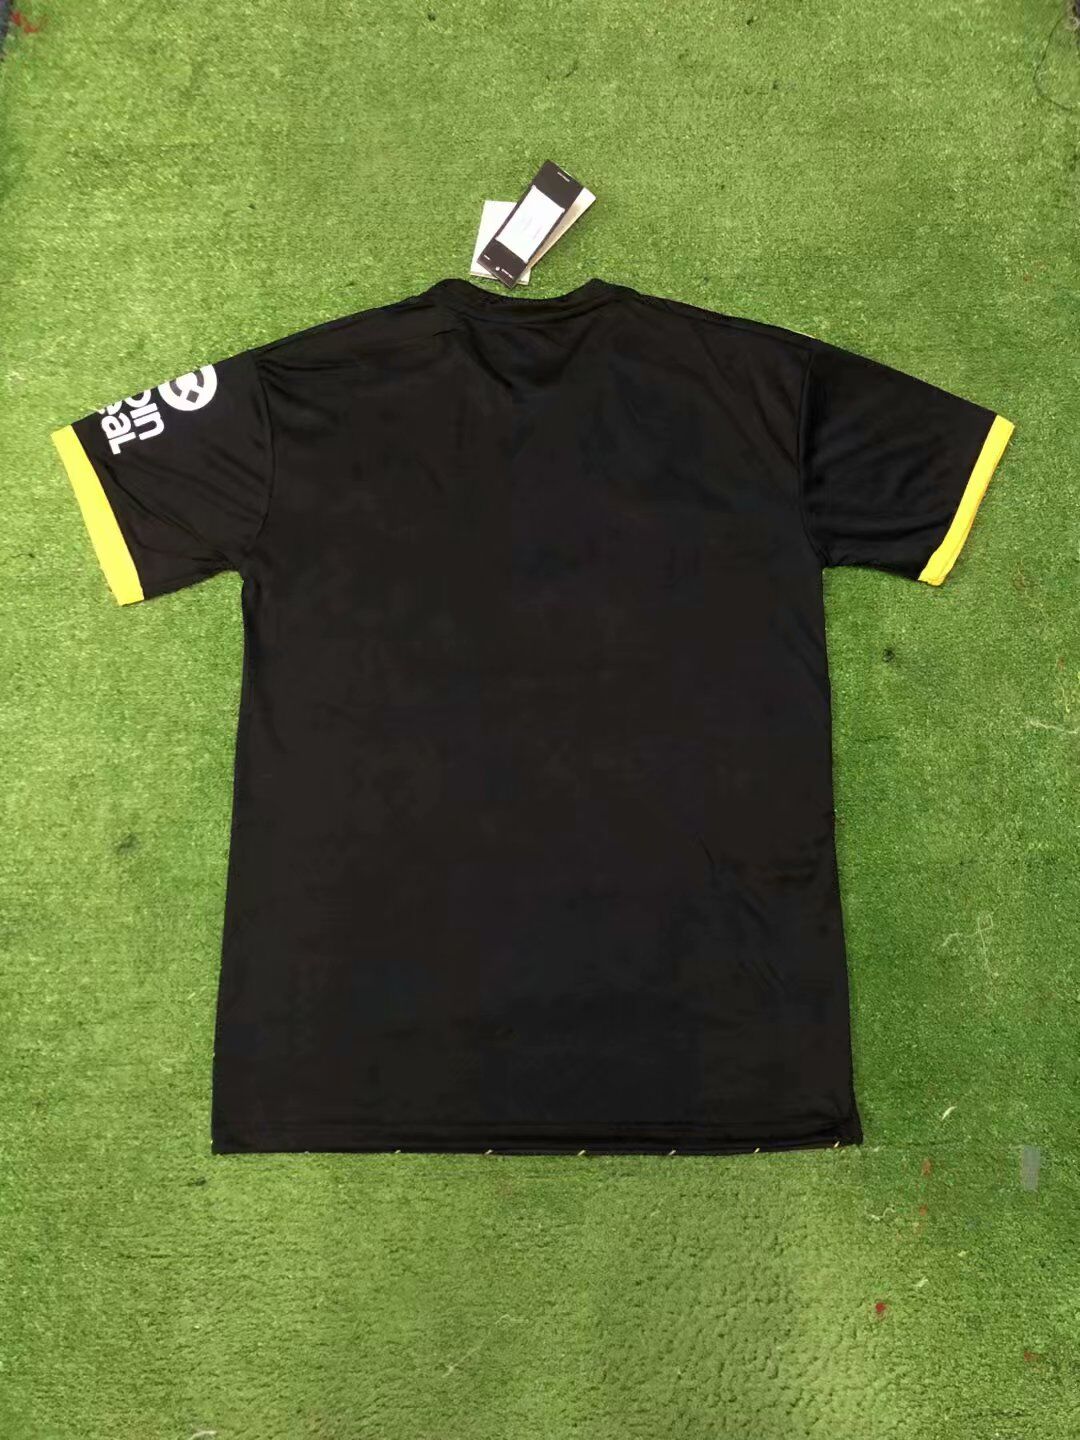 2019-20 Wolverhampton Wanderers Away Black Soccer Jerseys Shirt